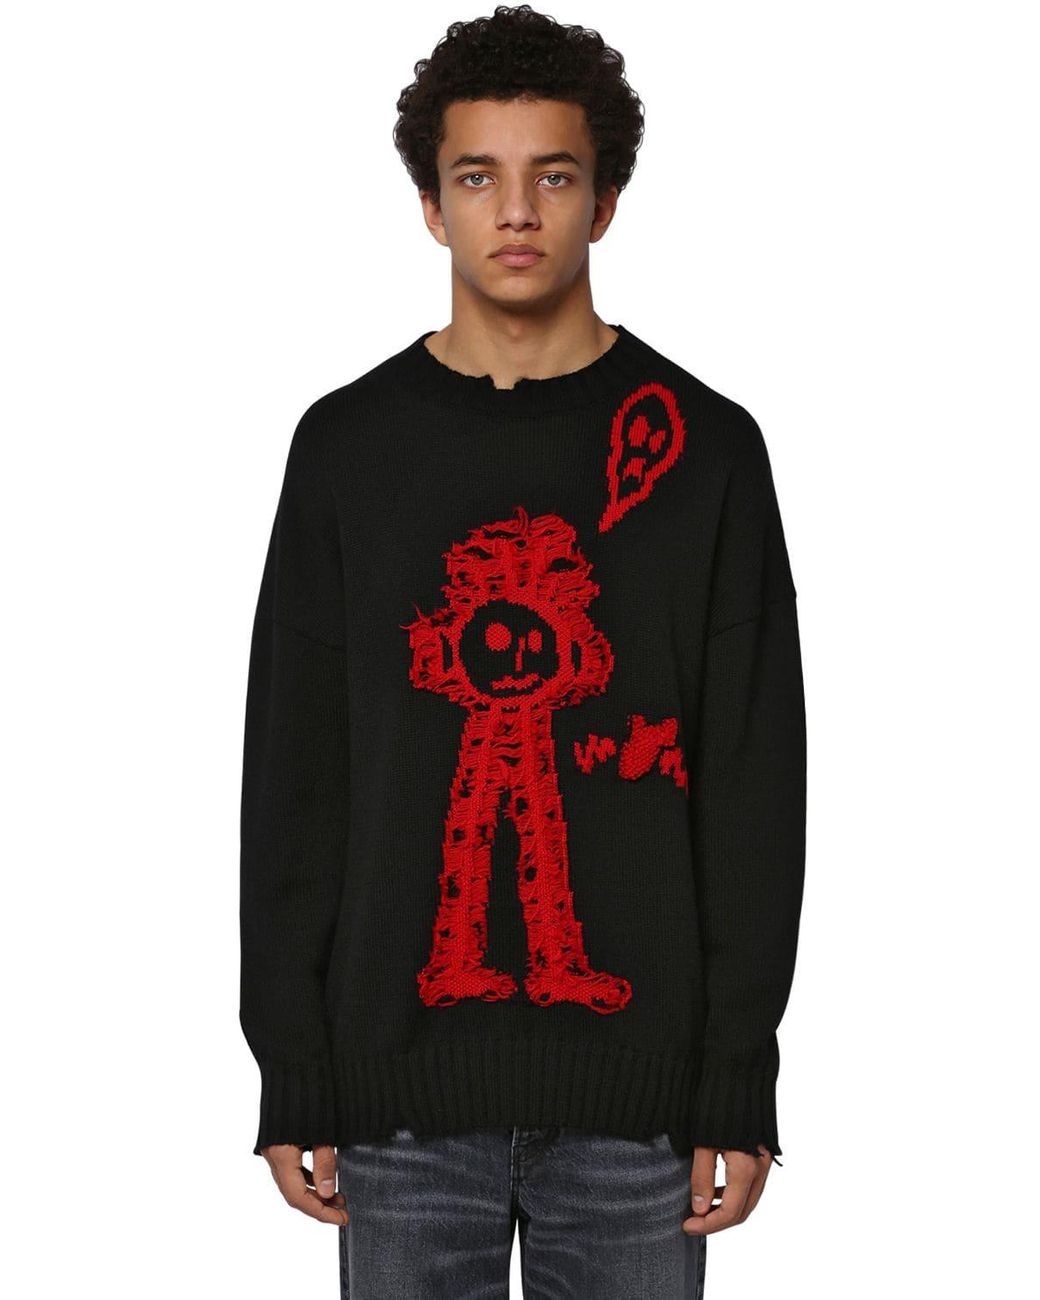 Marcelo Burlon Crewneck Wool Jacquard Knit Sweater in Black/Red (Black) for  Men - Lyst